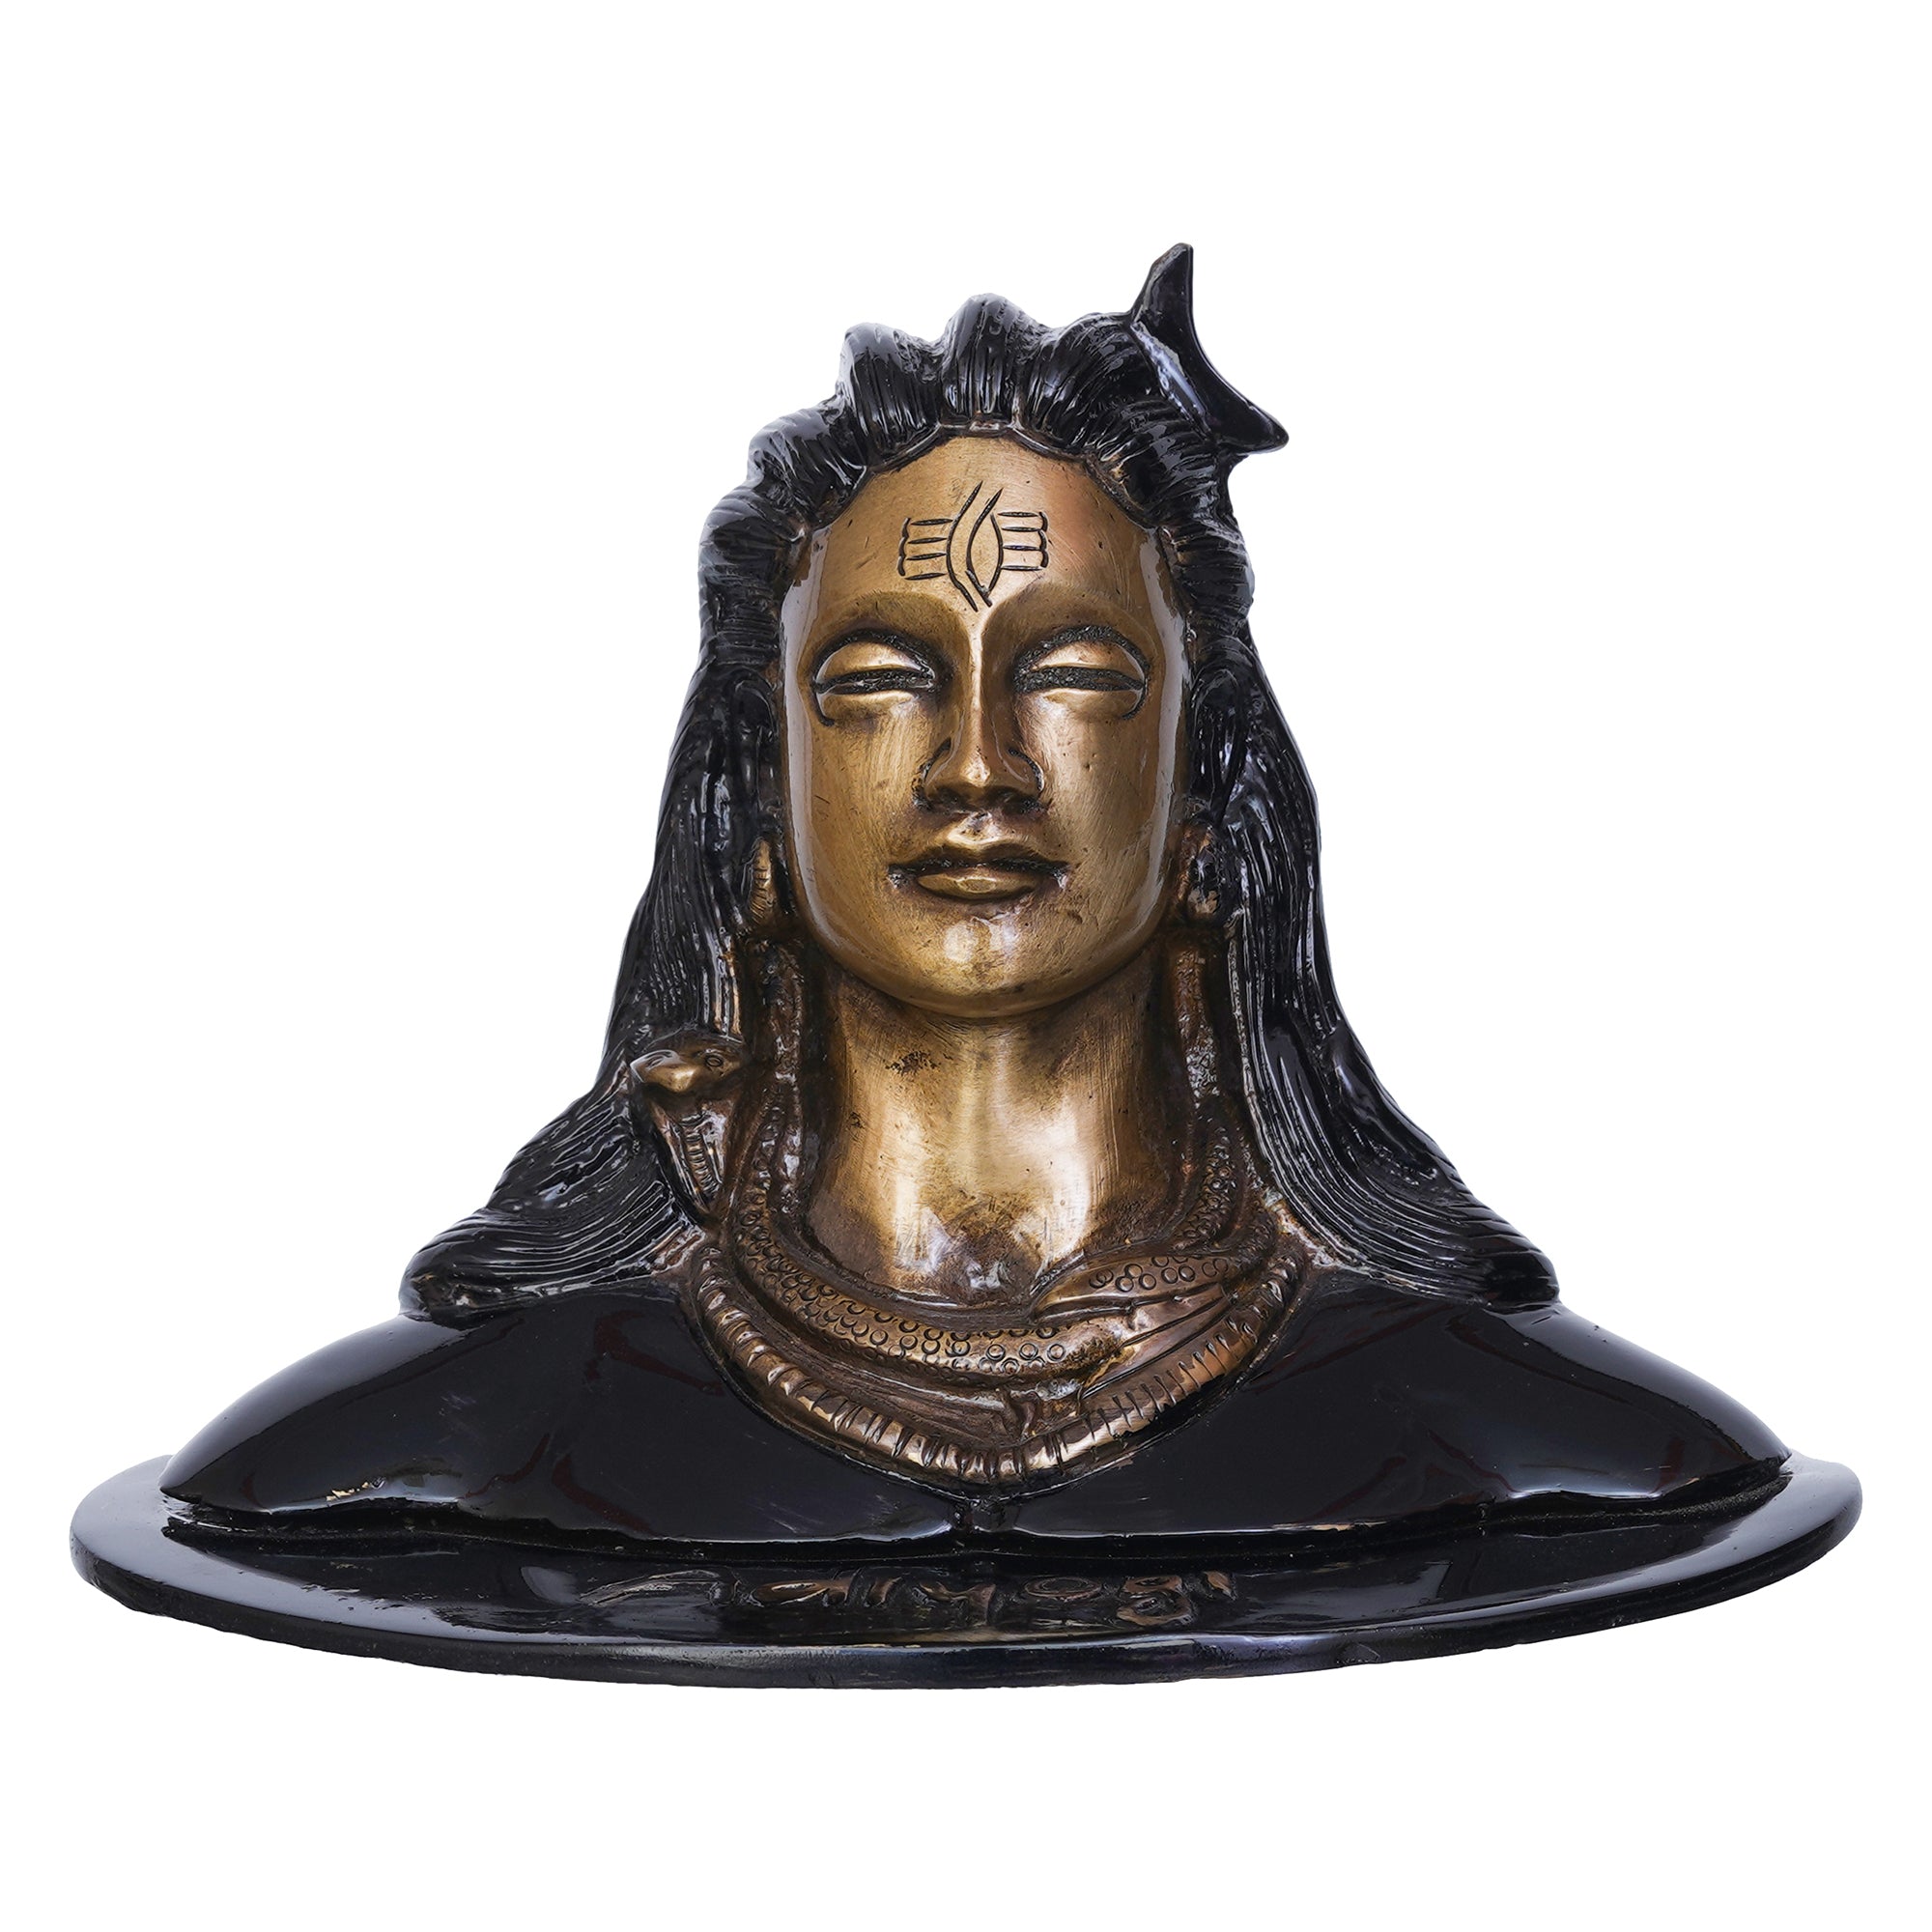 Black and Golden Brass Lord Adiyogi Shiva Statue, Shiv Murti, Shiva Idol for Car Dashboard, Home Office Decoration - Gift for Maha Shivratri Festival 2